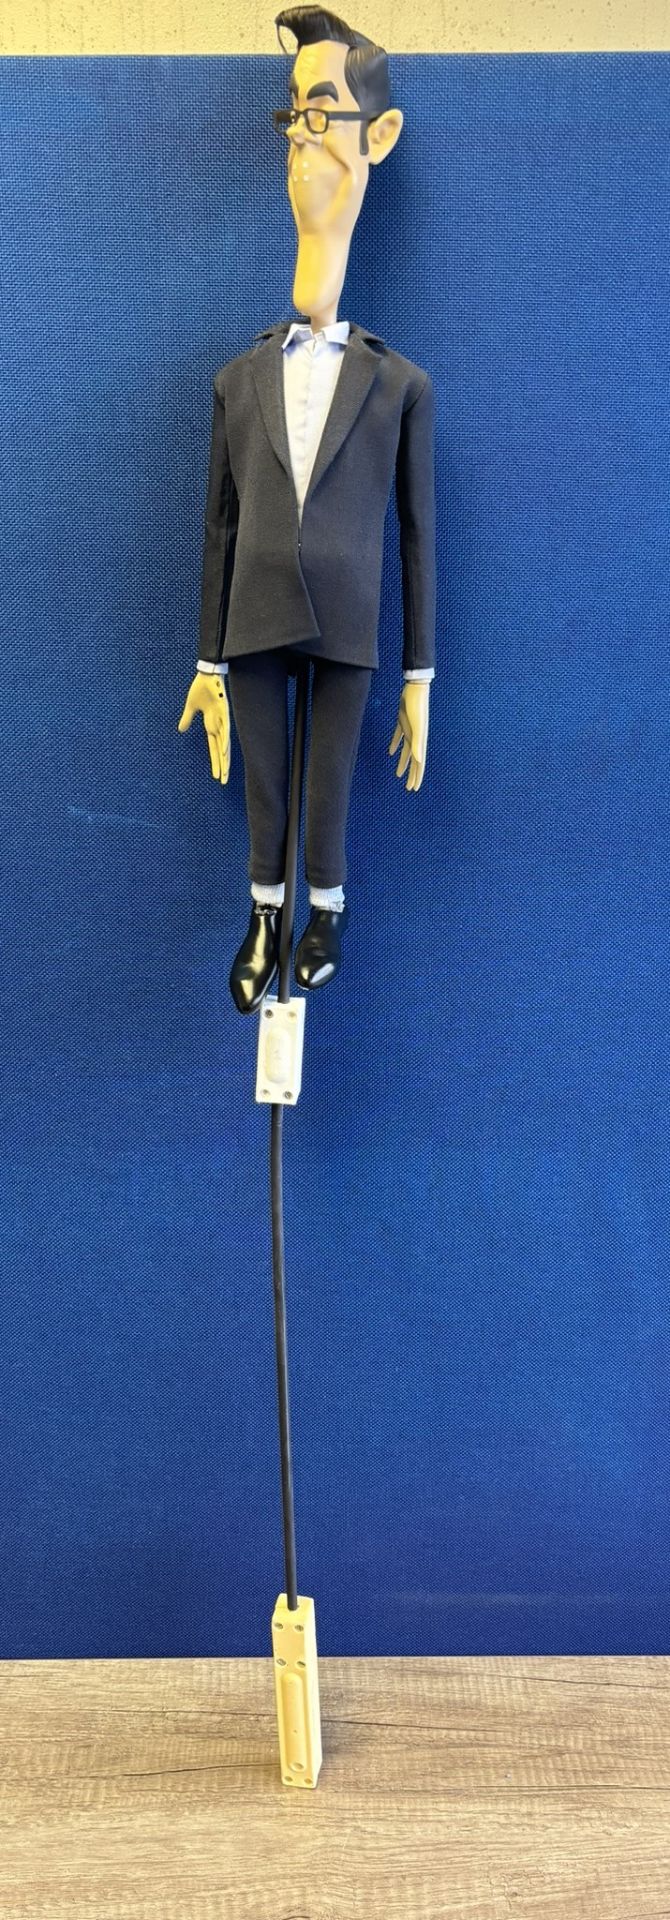 Newzoid puppet - Richard Osman - Image 3 of 3